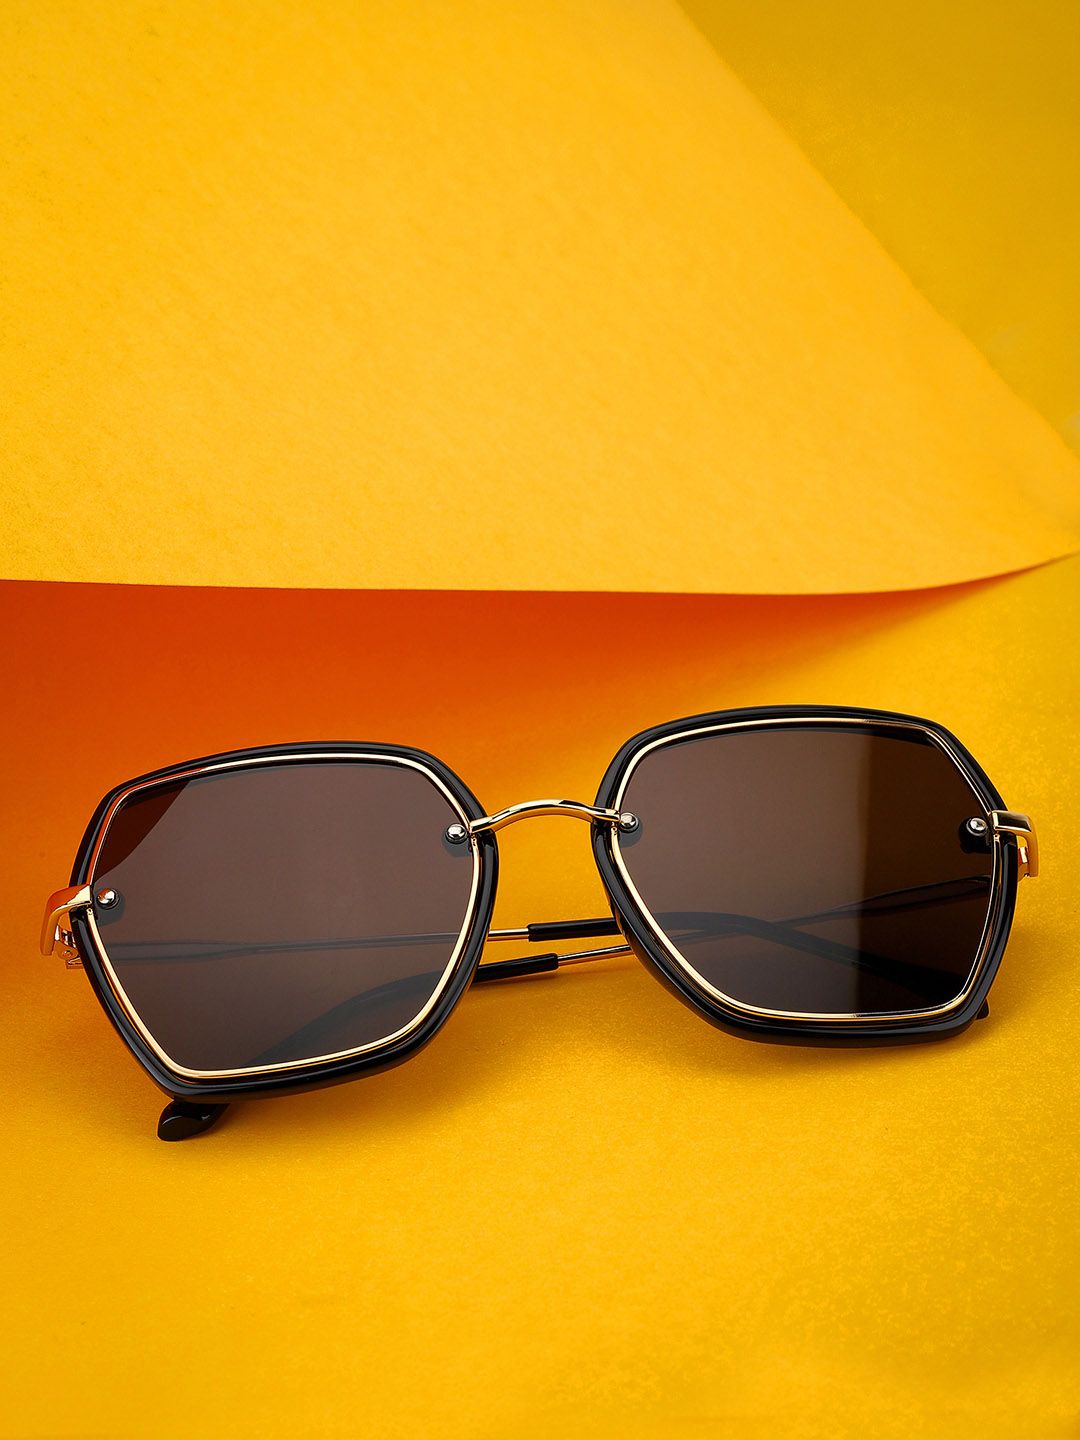 Carlton London Women UV Protected Oversized Sunglasses 2219-C1 Price in India